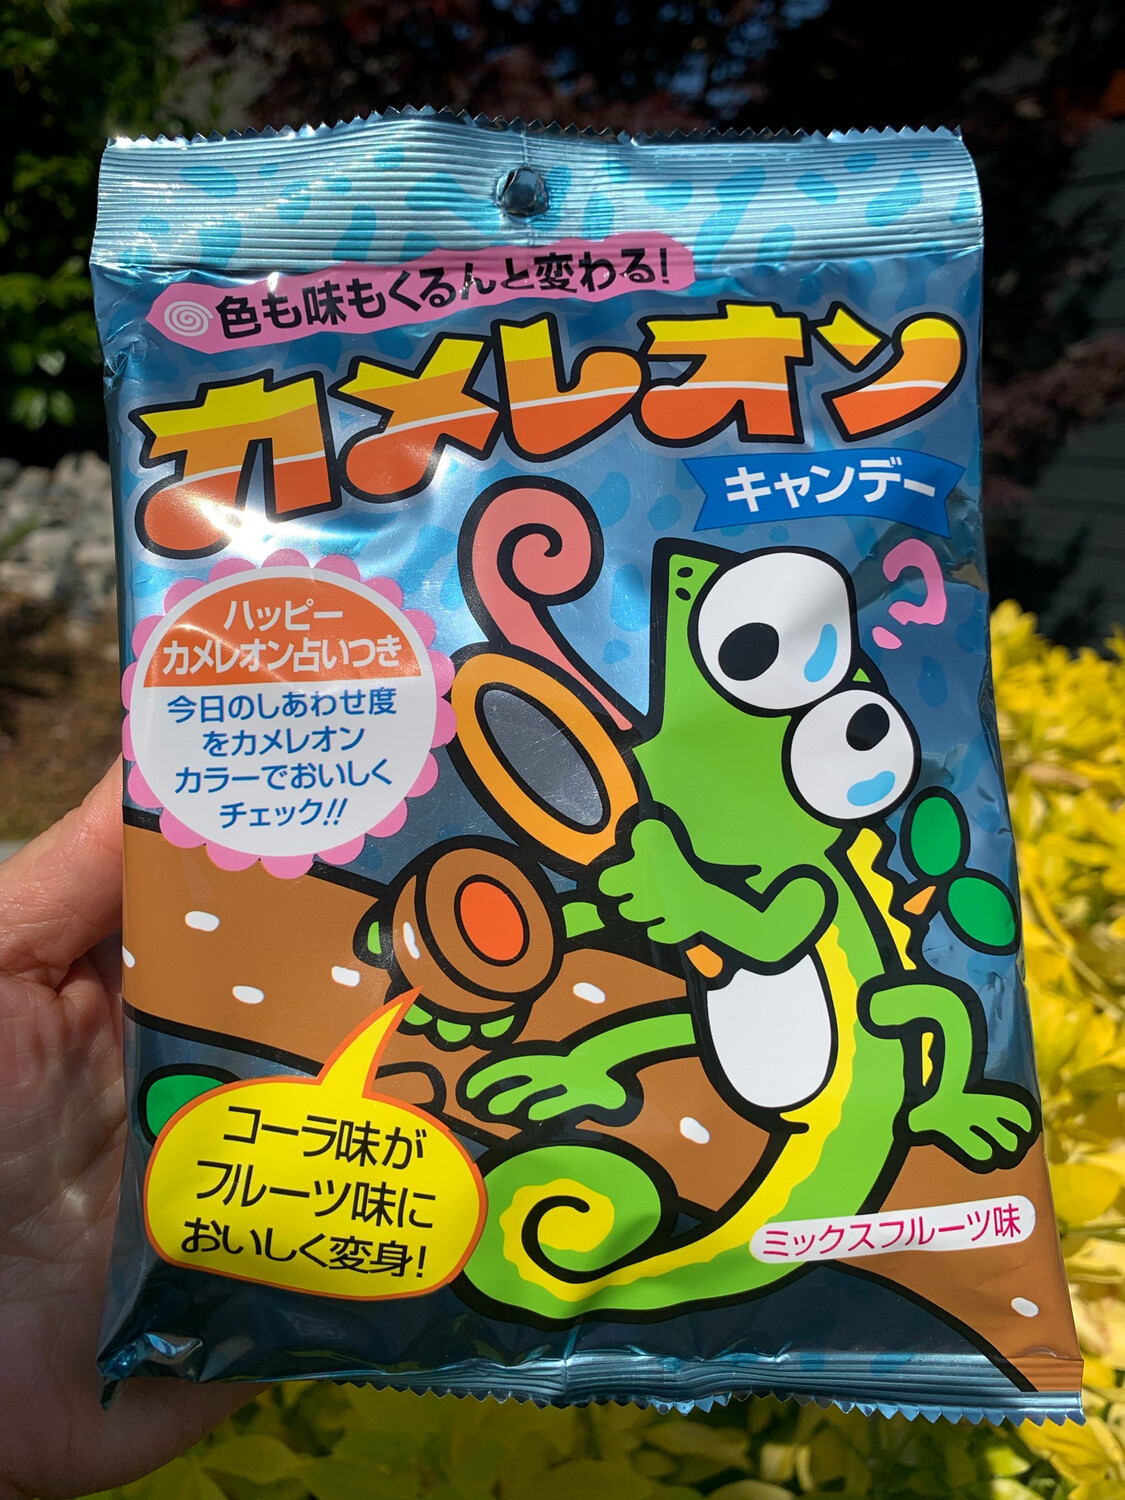 Japan Kikko Seika Fortune Candy